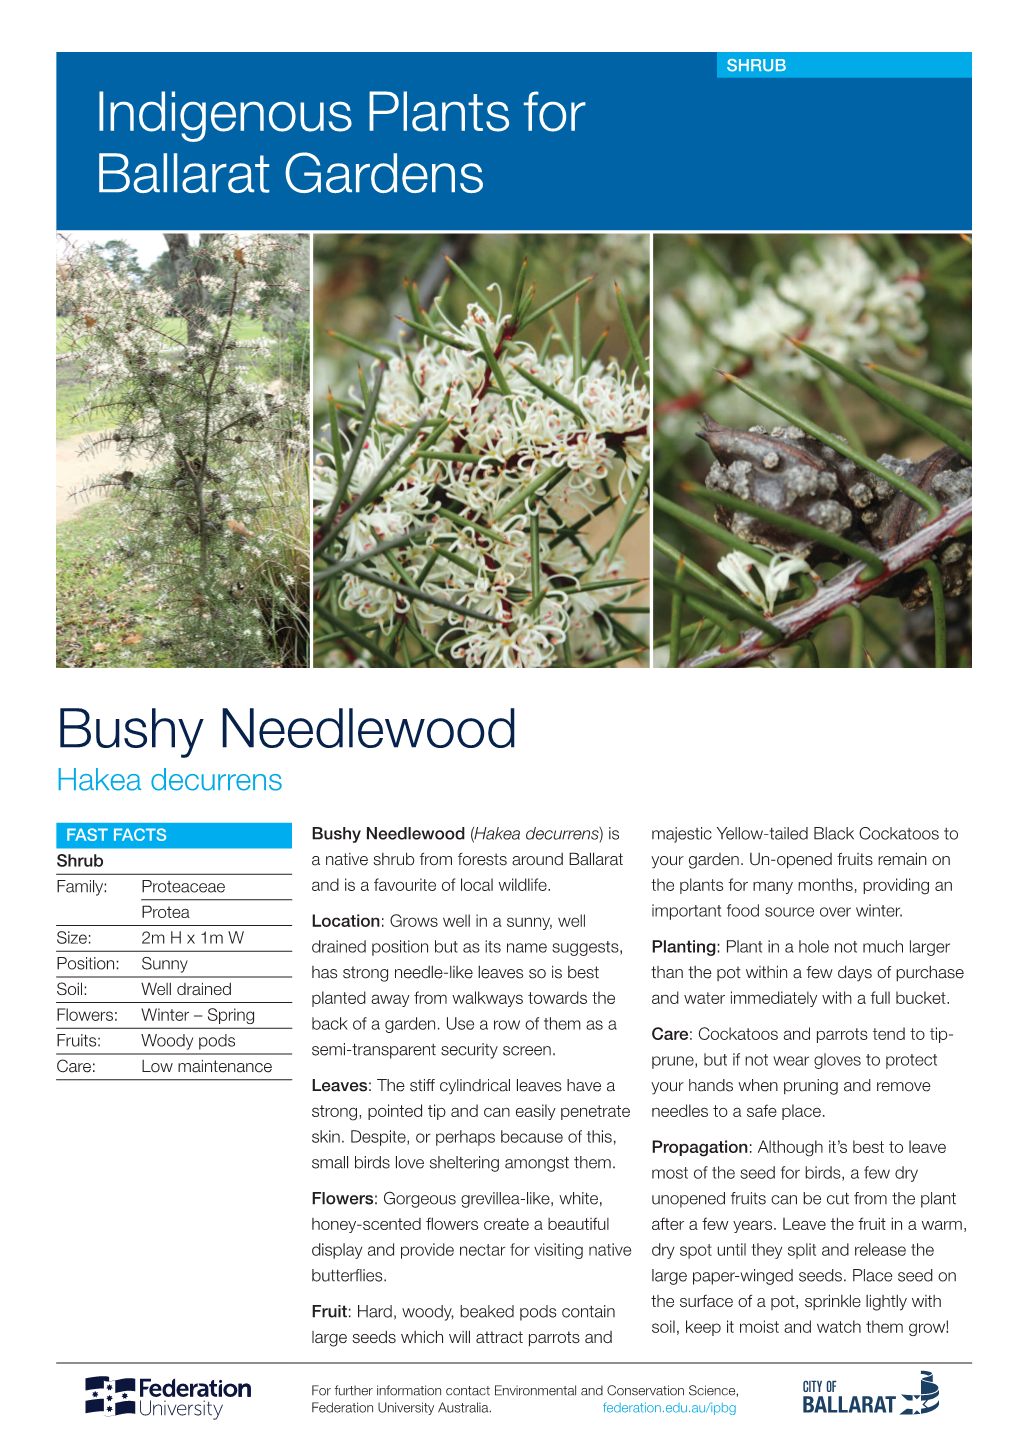 Bushy Needlewood Indigenous Plants for Ballarat Gardens